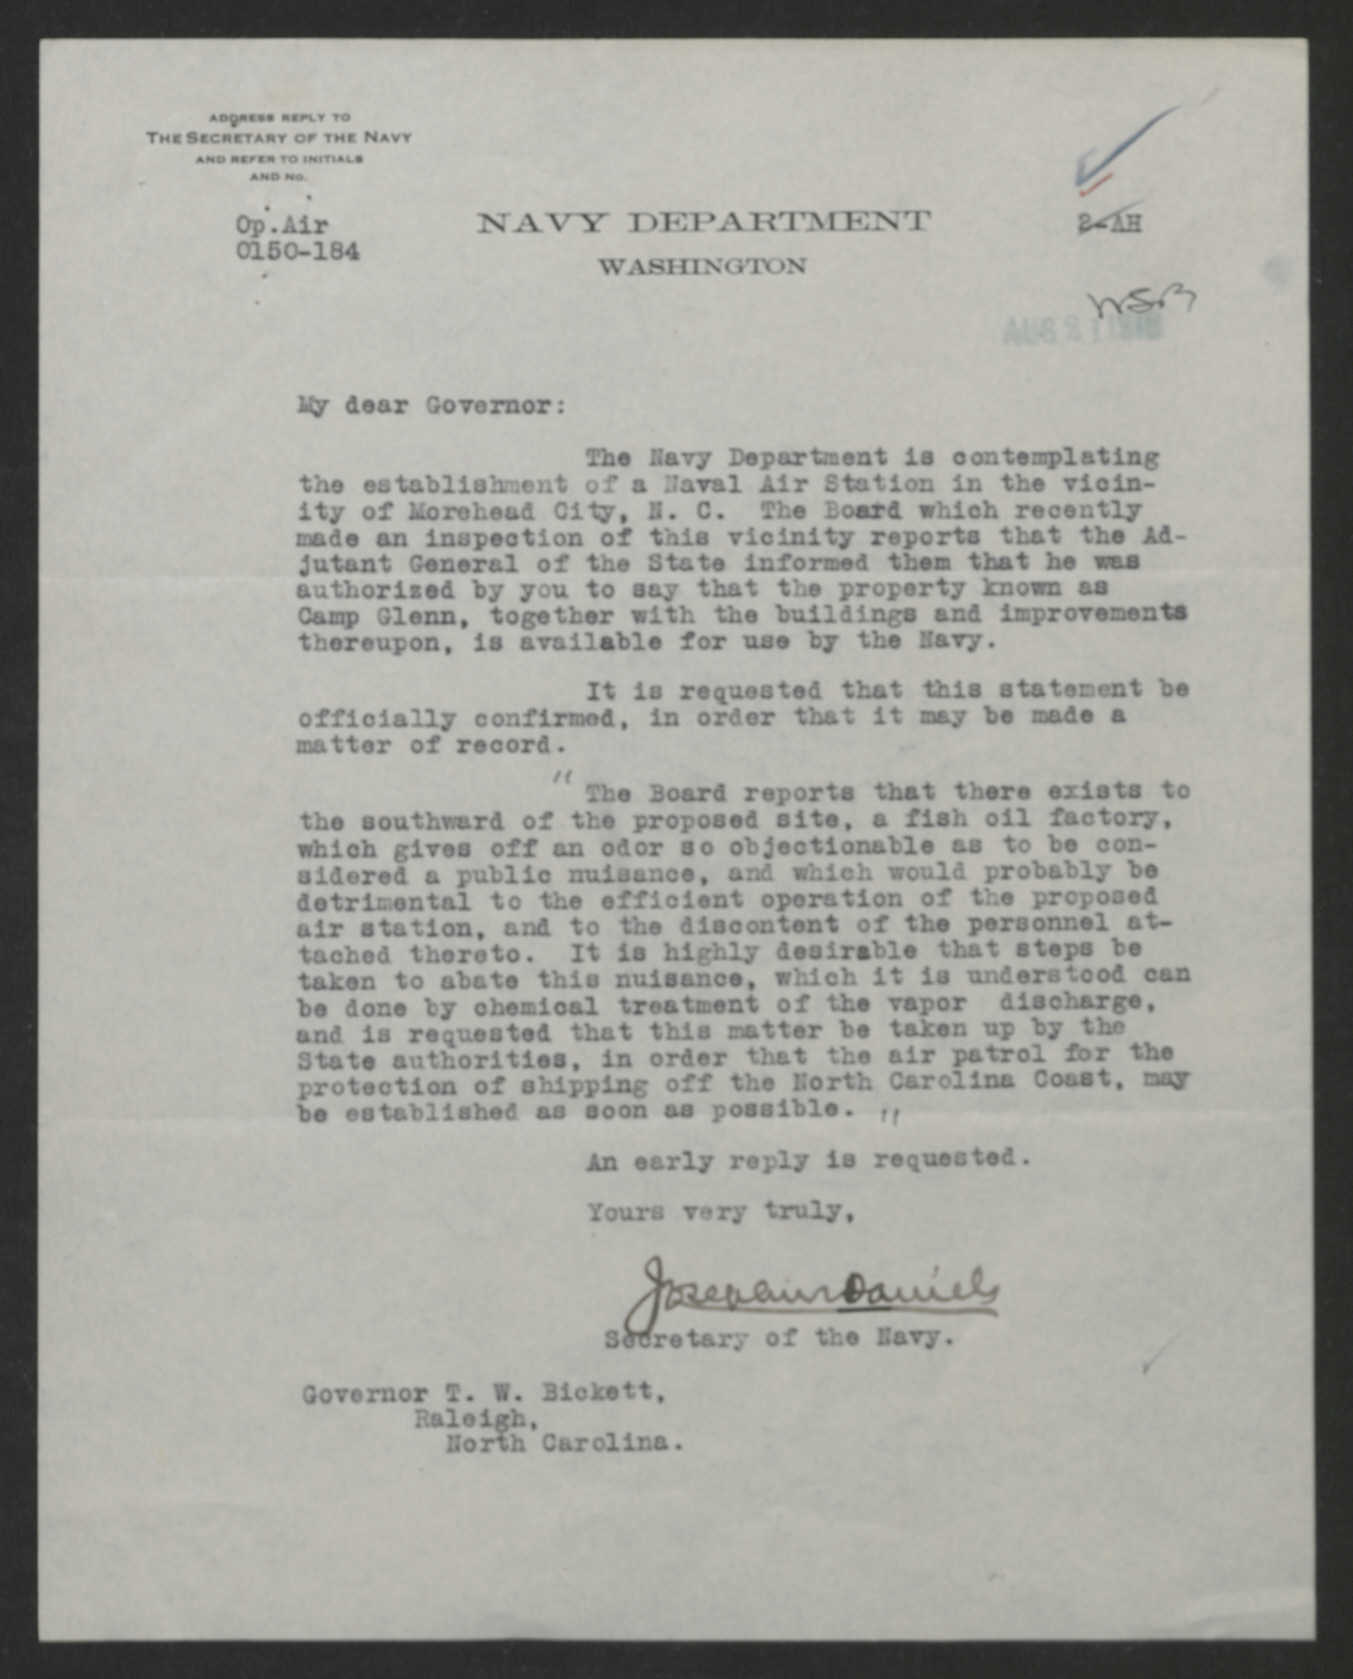 Daniels to Bickett, August 21, 1918